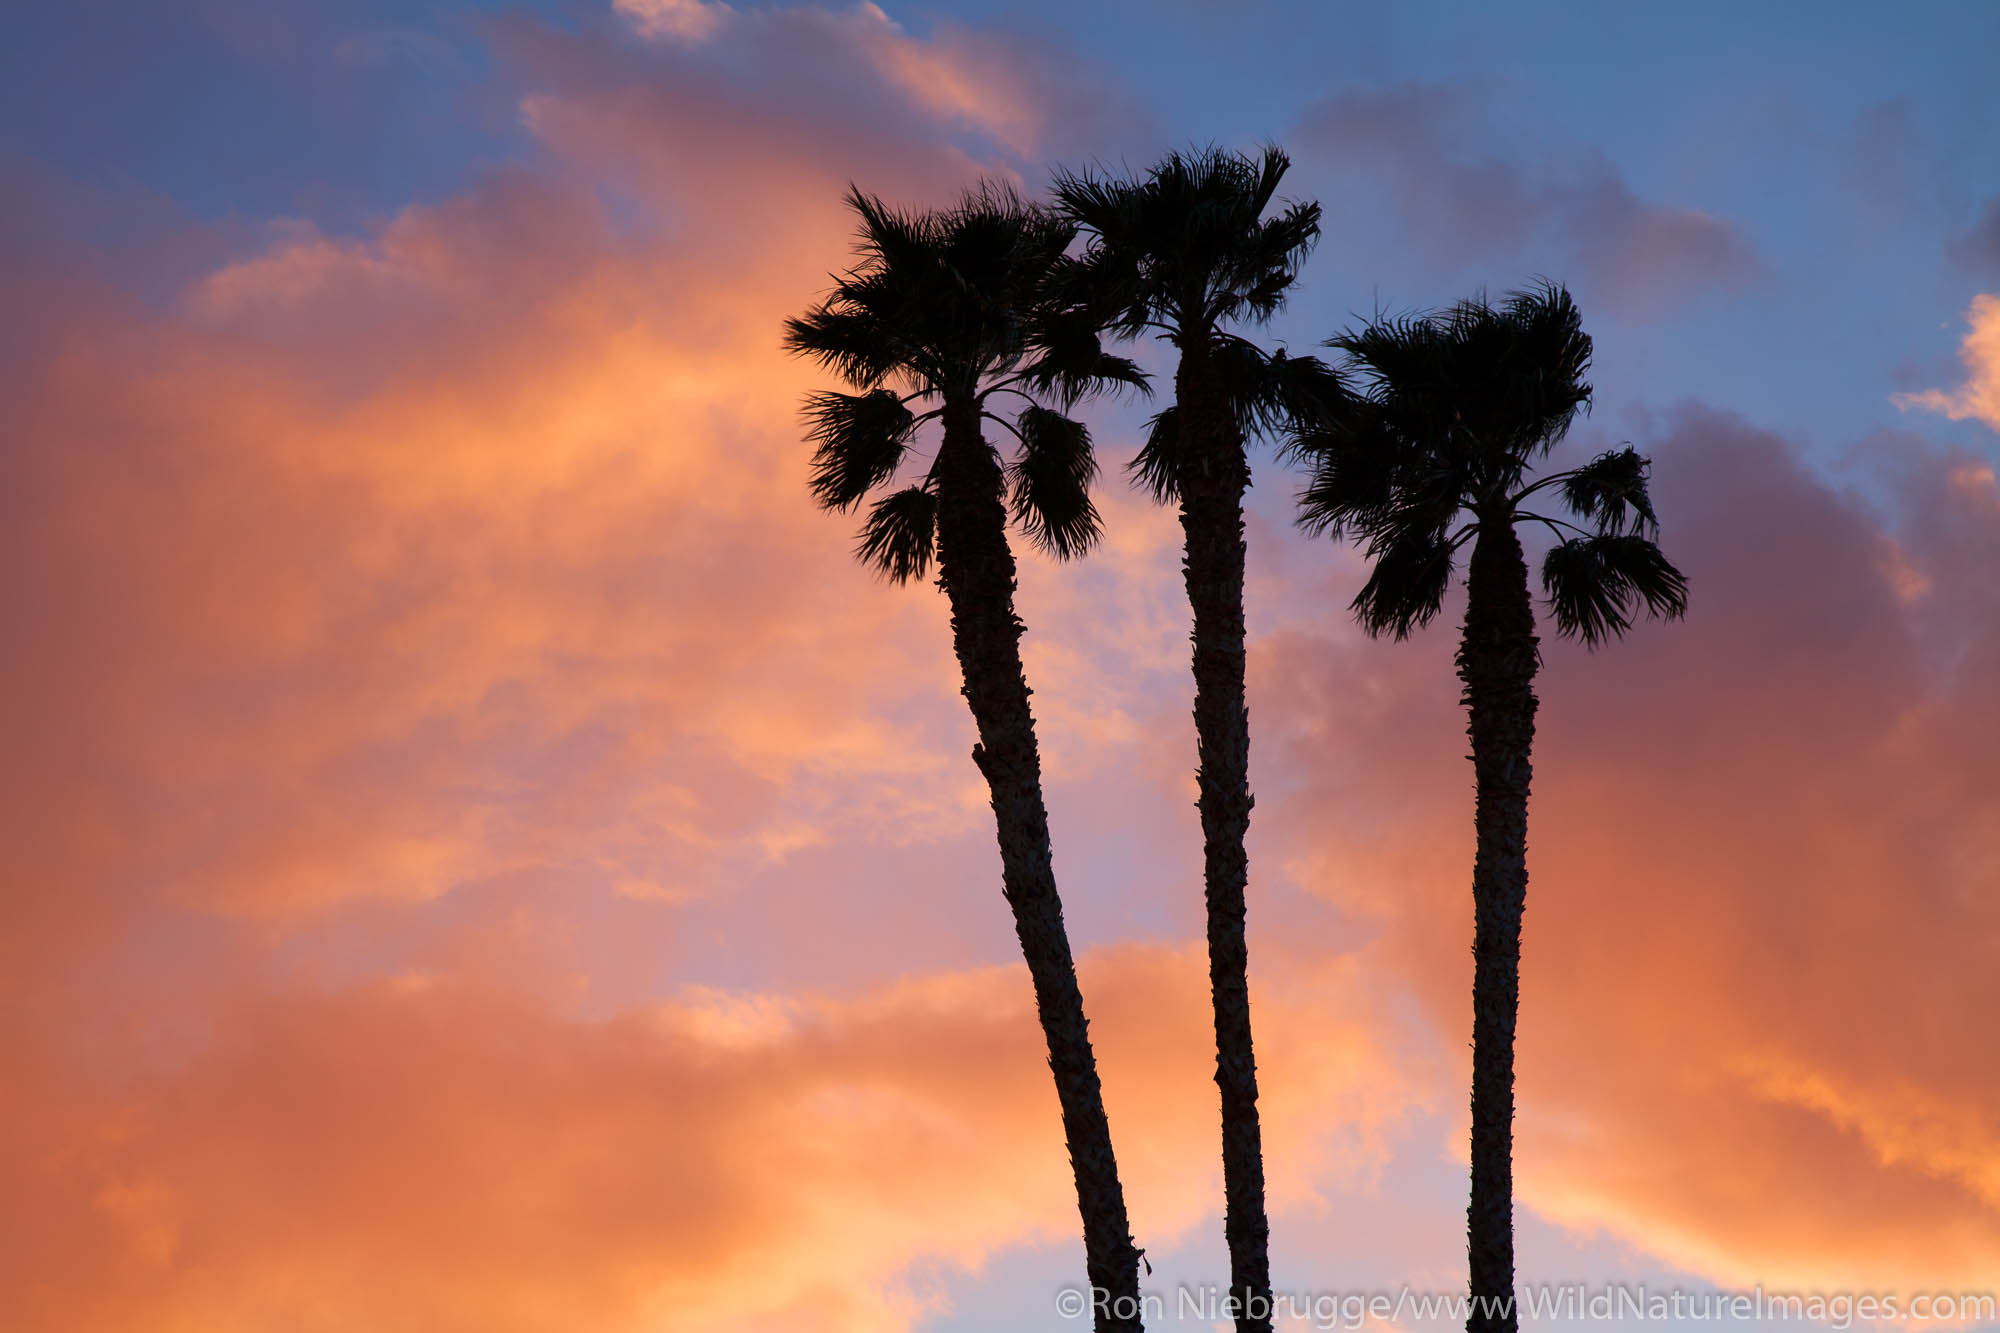 Palm trees at the Callville Bay Marina, Lake Mead National Recreation Area, near Las Vegas, Nevada.